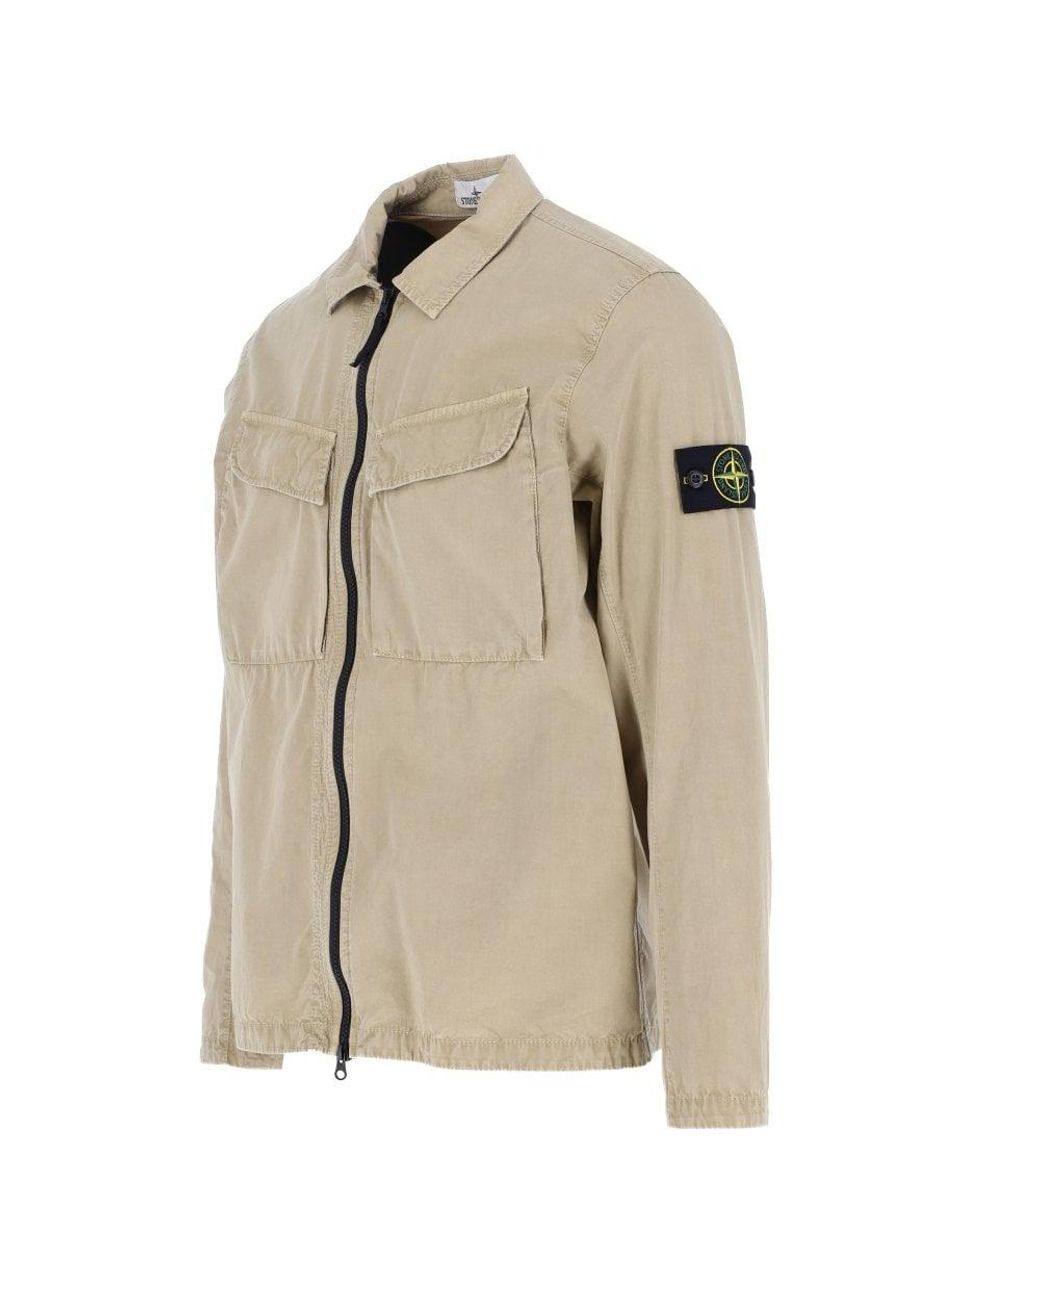 Stone Island Cotton Zip Through Overshirt in Khaki (Green) for Men | Lyst